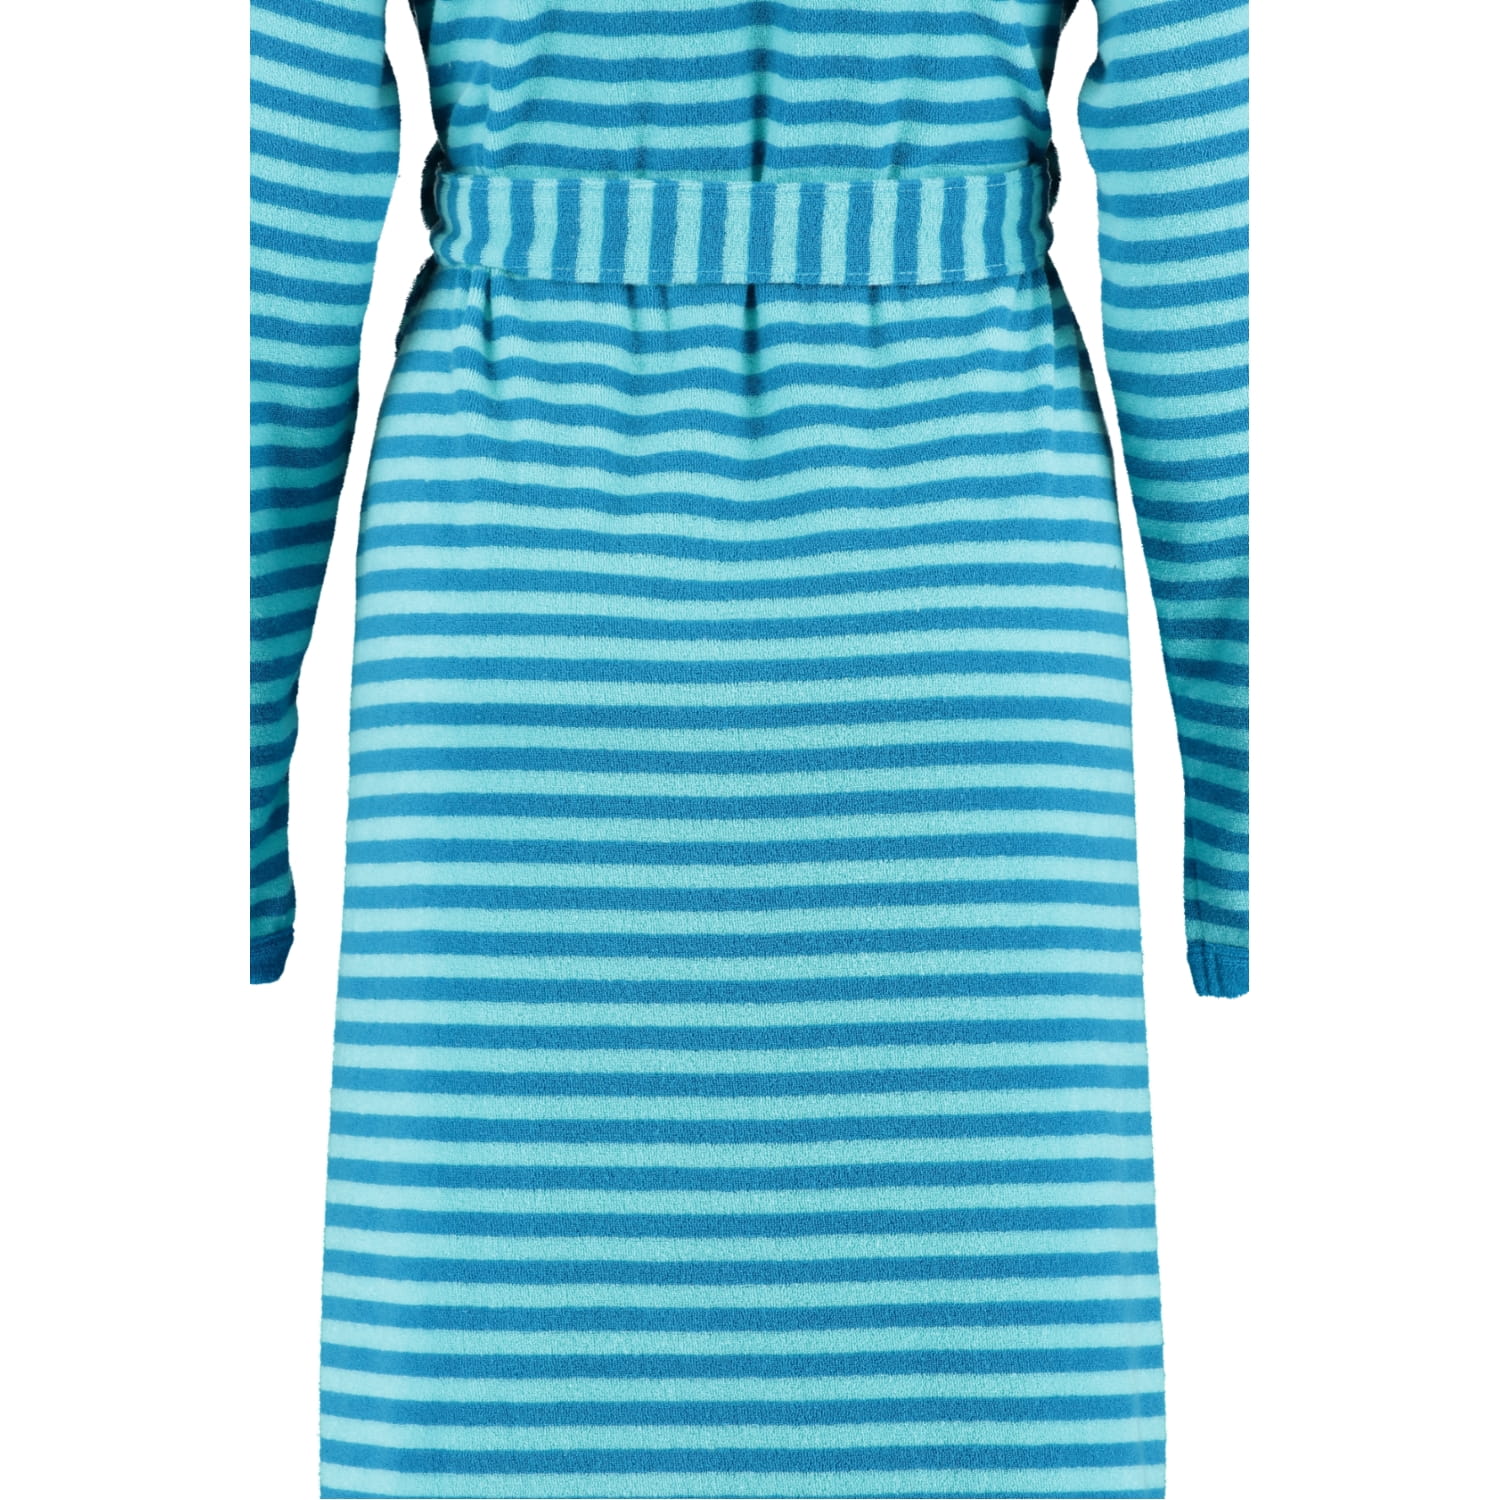 Esprit Damen Bademantel Damen Kapuze Bademantel - Striped - L Hoody turquoise | 002 | Farbe